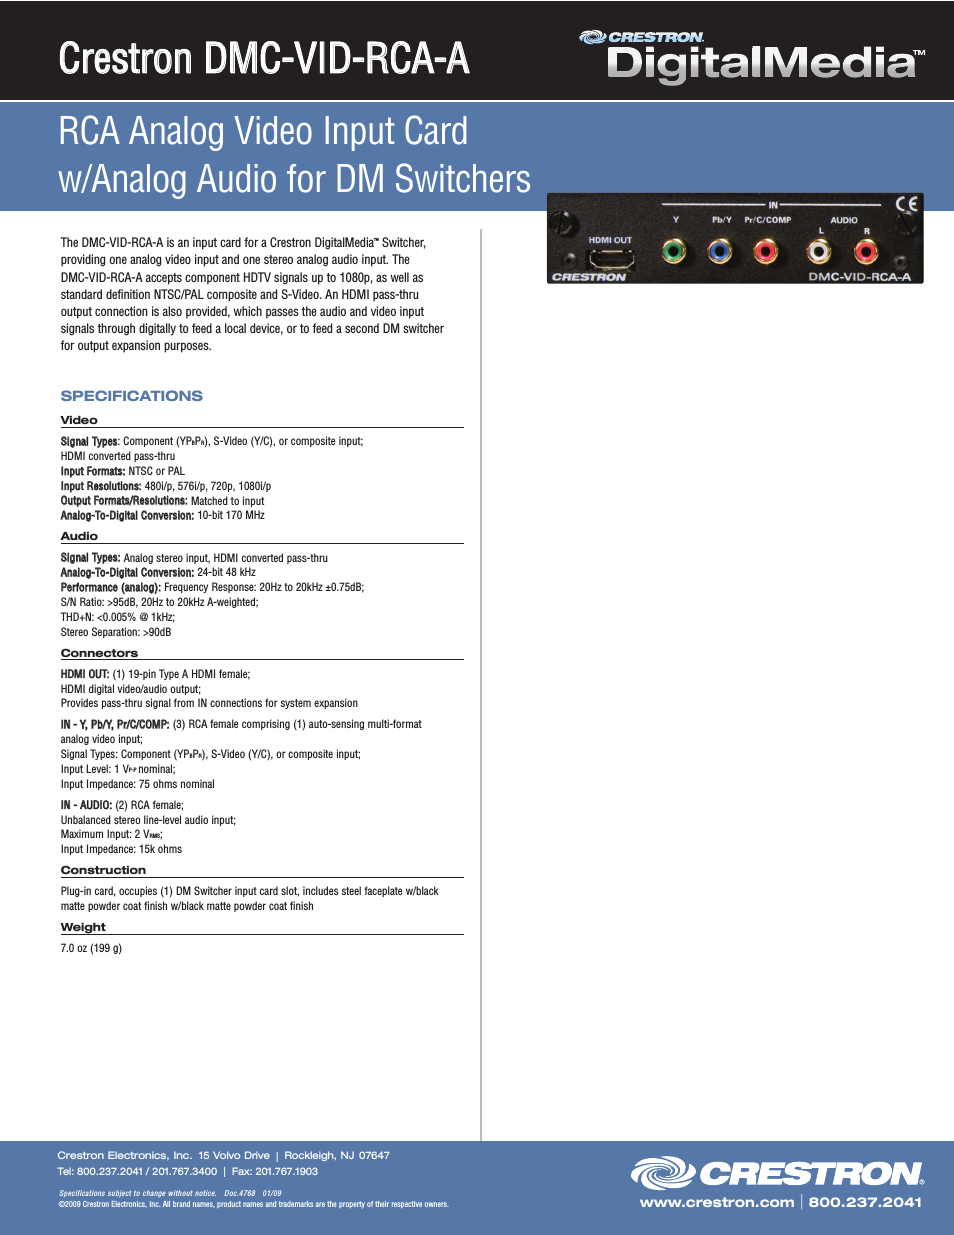 RCA Analog Video Input Card w/Analog Audio DMC-VID-RCA-A